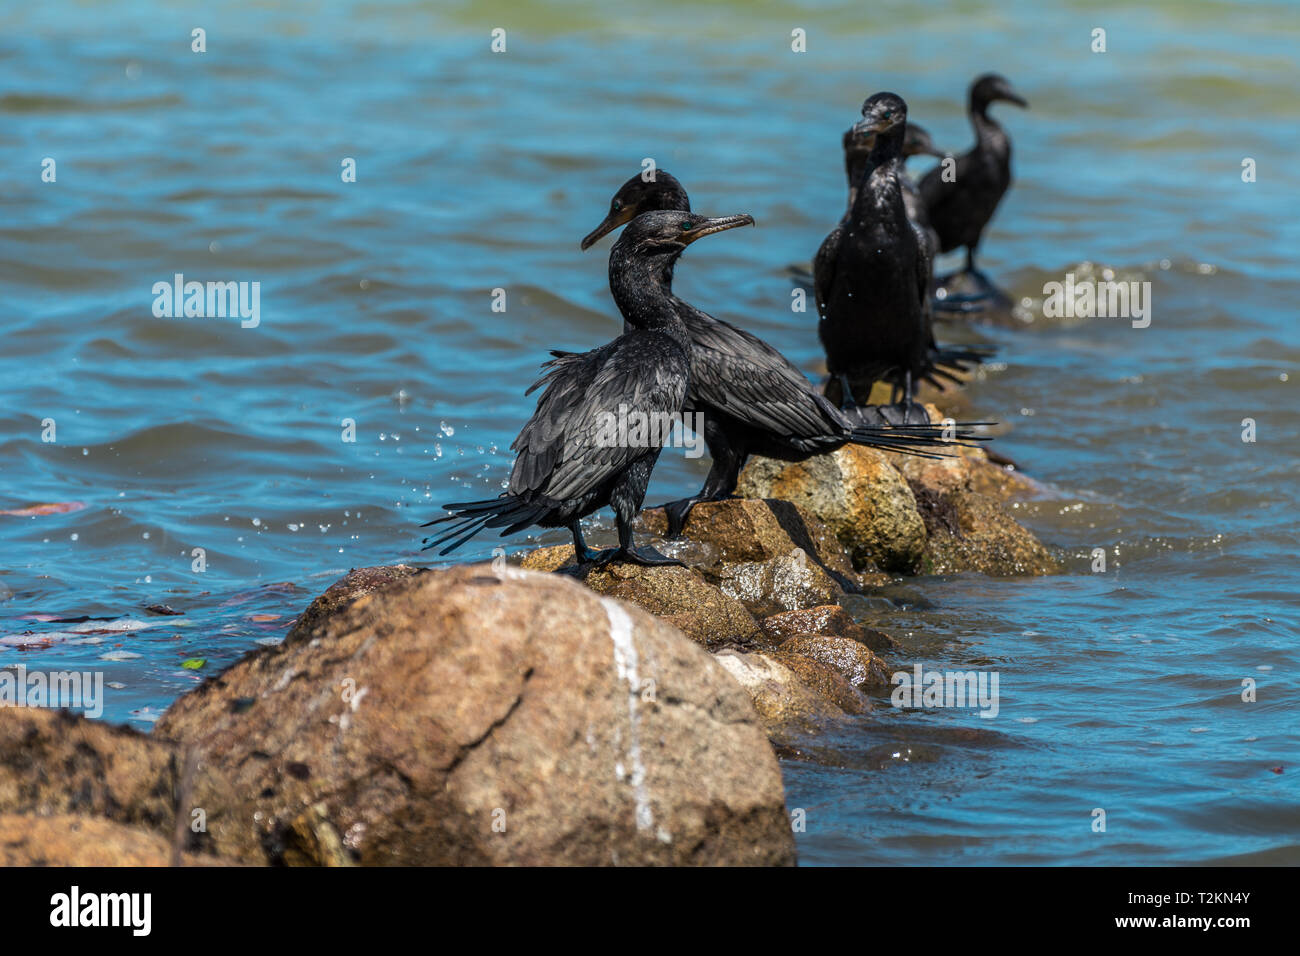 2019, January. Florianopolis, Brazil. Group of black birds at the Conceicao Lagoon. The bird is the bigua, Nannopterum brasilianus. Stock Photo